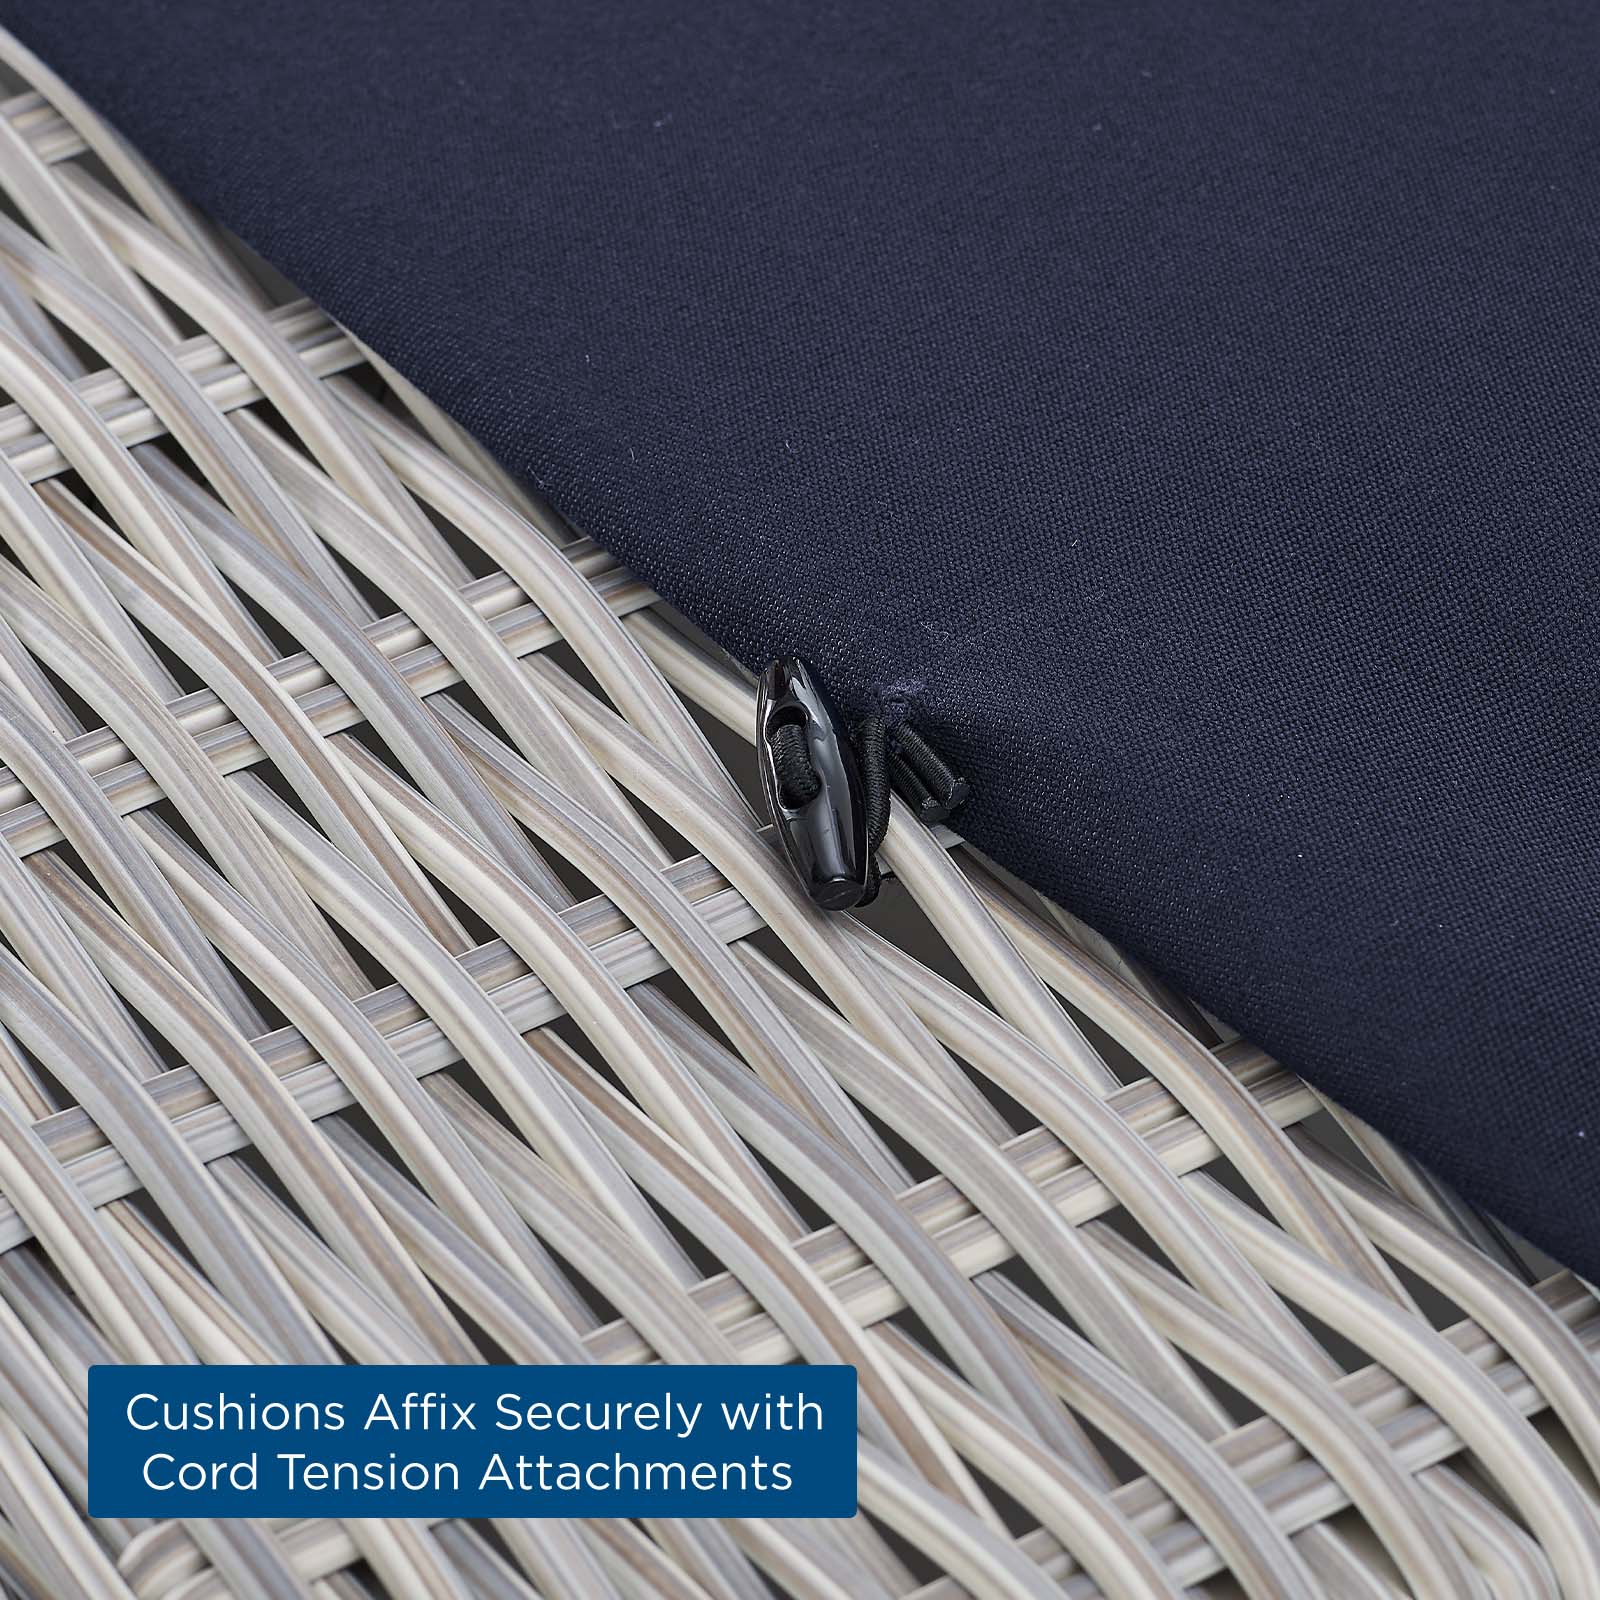 Conway Sunbrella® Outdoor Patio Wicker Rattan Round Corner Chair - East Shore Modern Home Furnishings